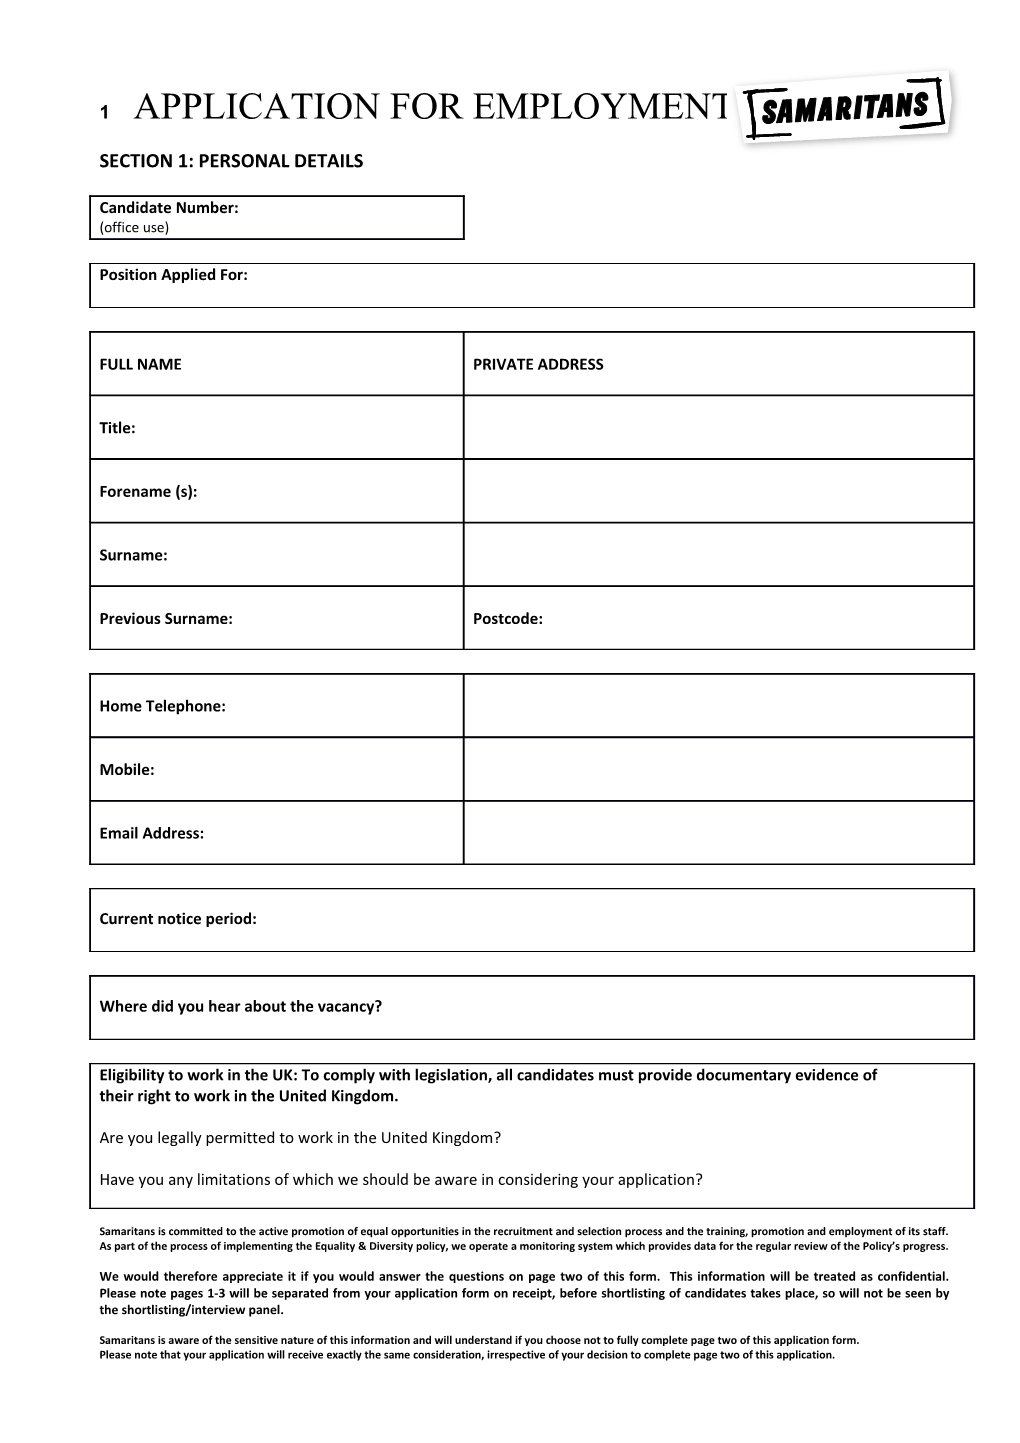 Samaritans Application Form